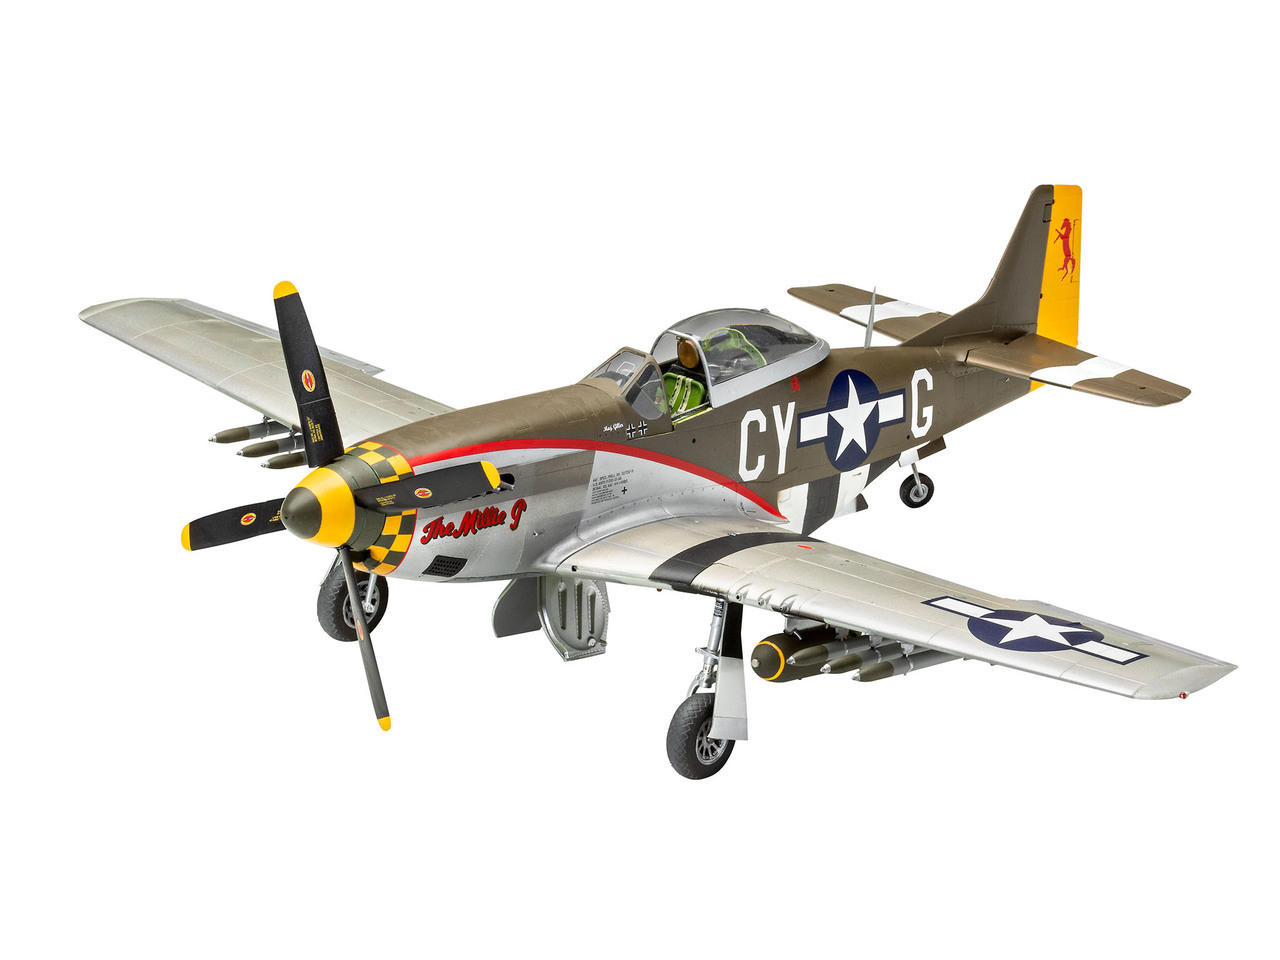 RMG3838 1/32 Revell P-51D Mustang Late Version Plastic Model Kit MMD Squadron